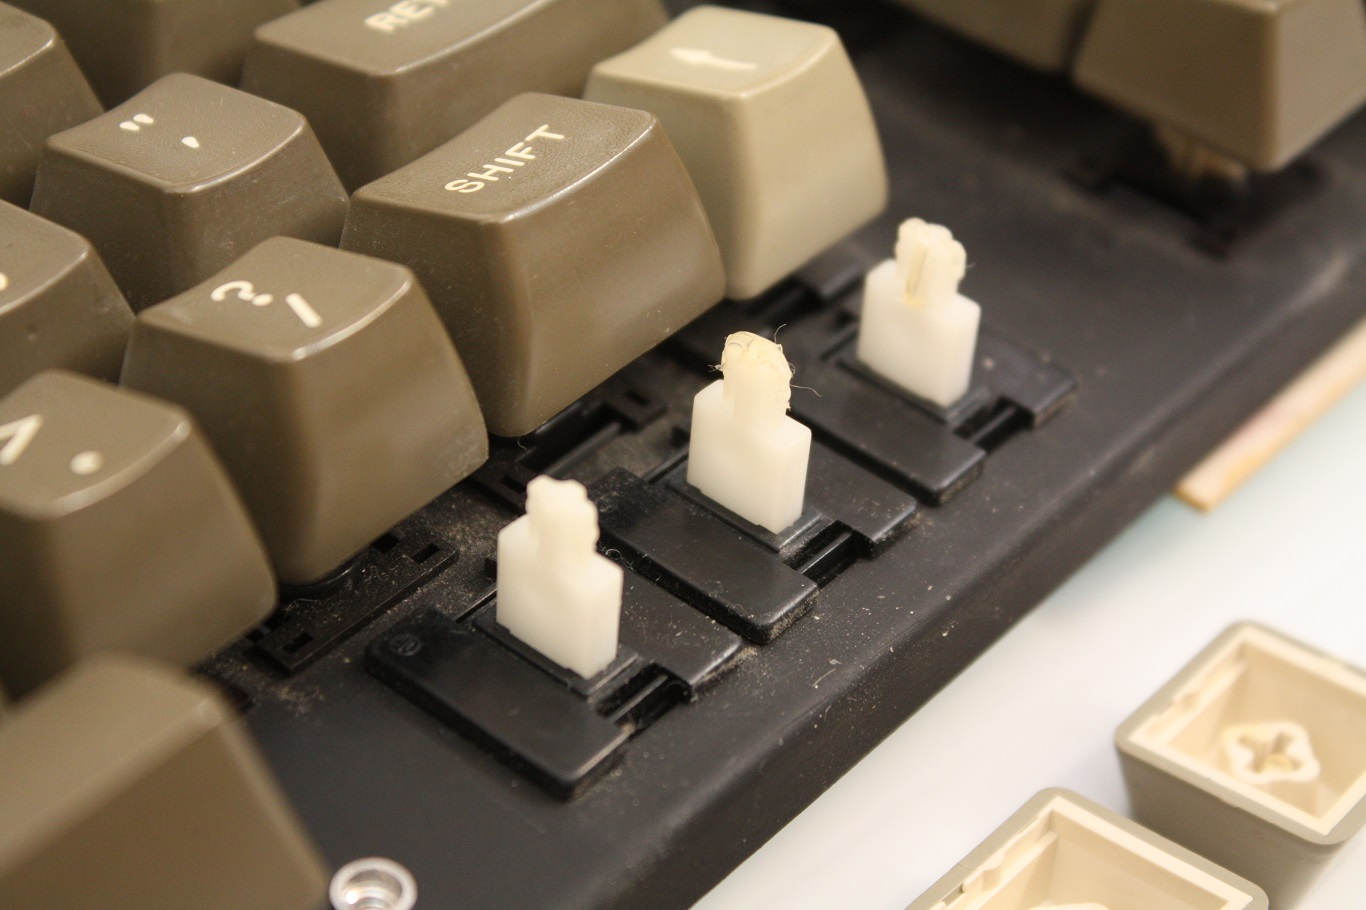 Apple III - double action cursor keys